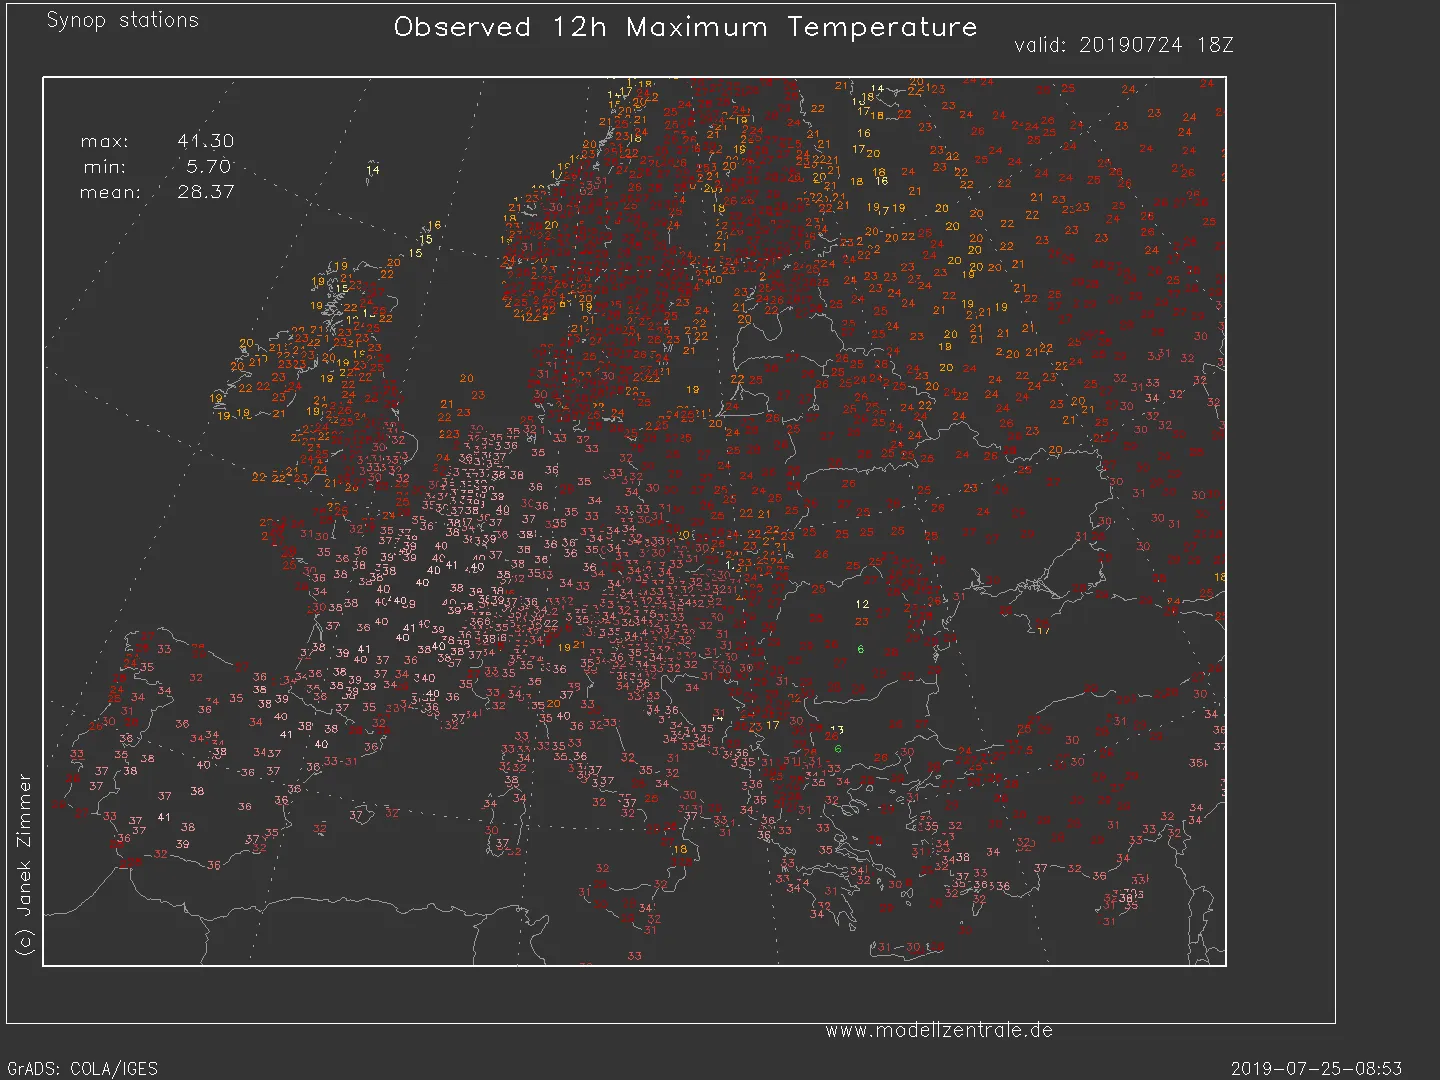 Max temperature in Europe, Heatwave July 2019